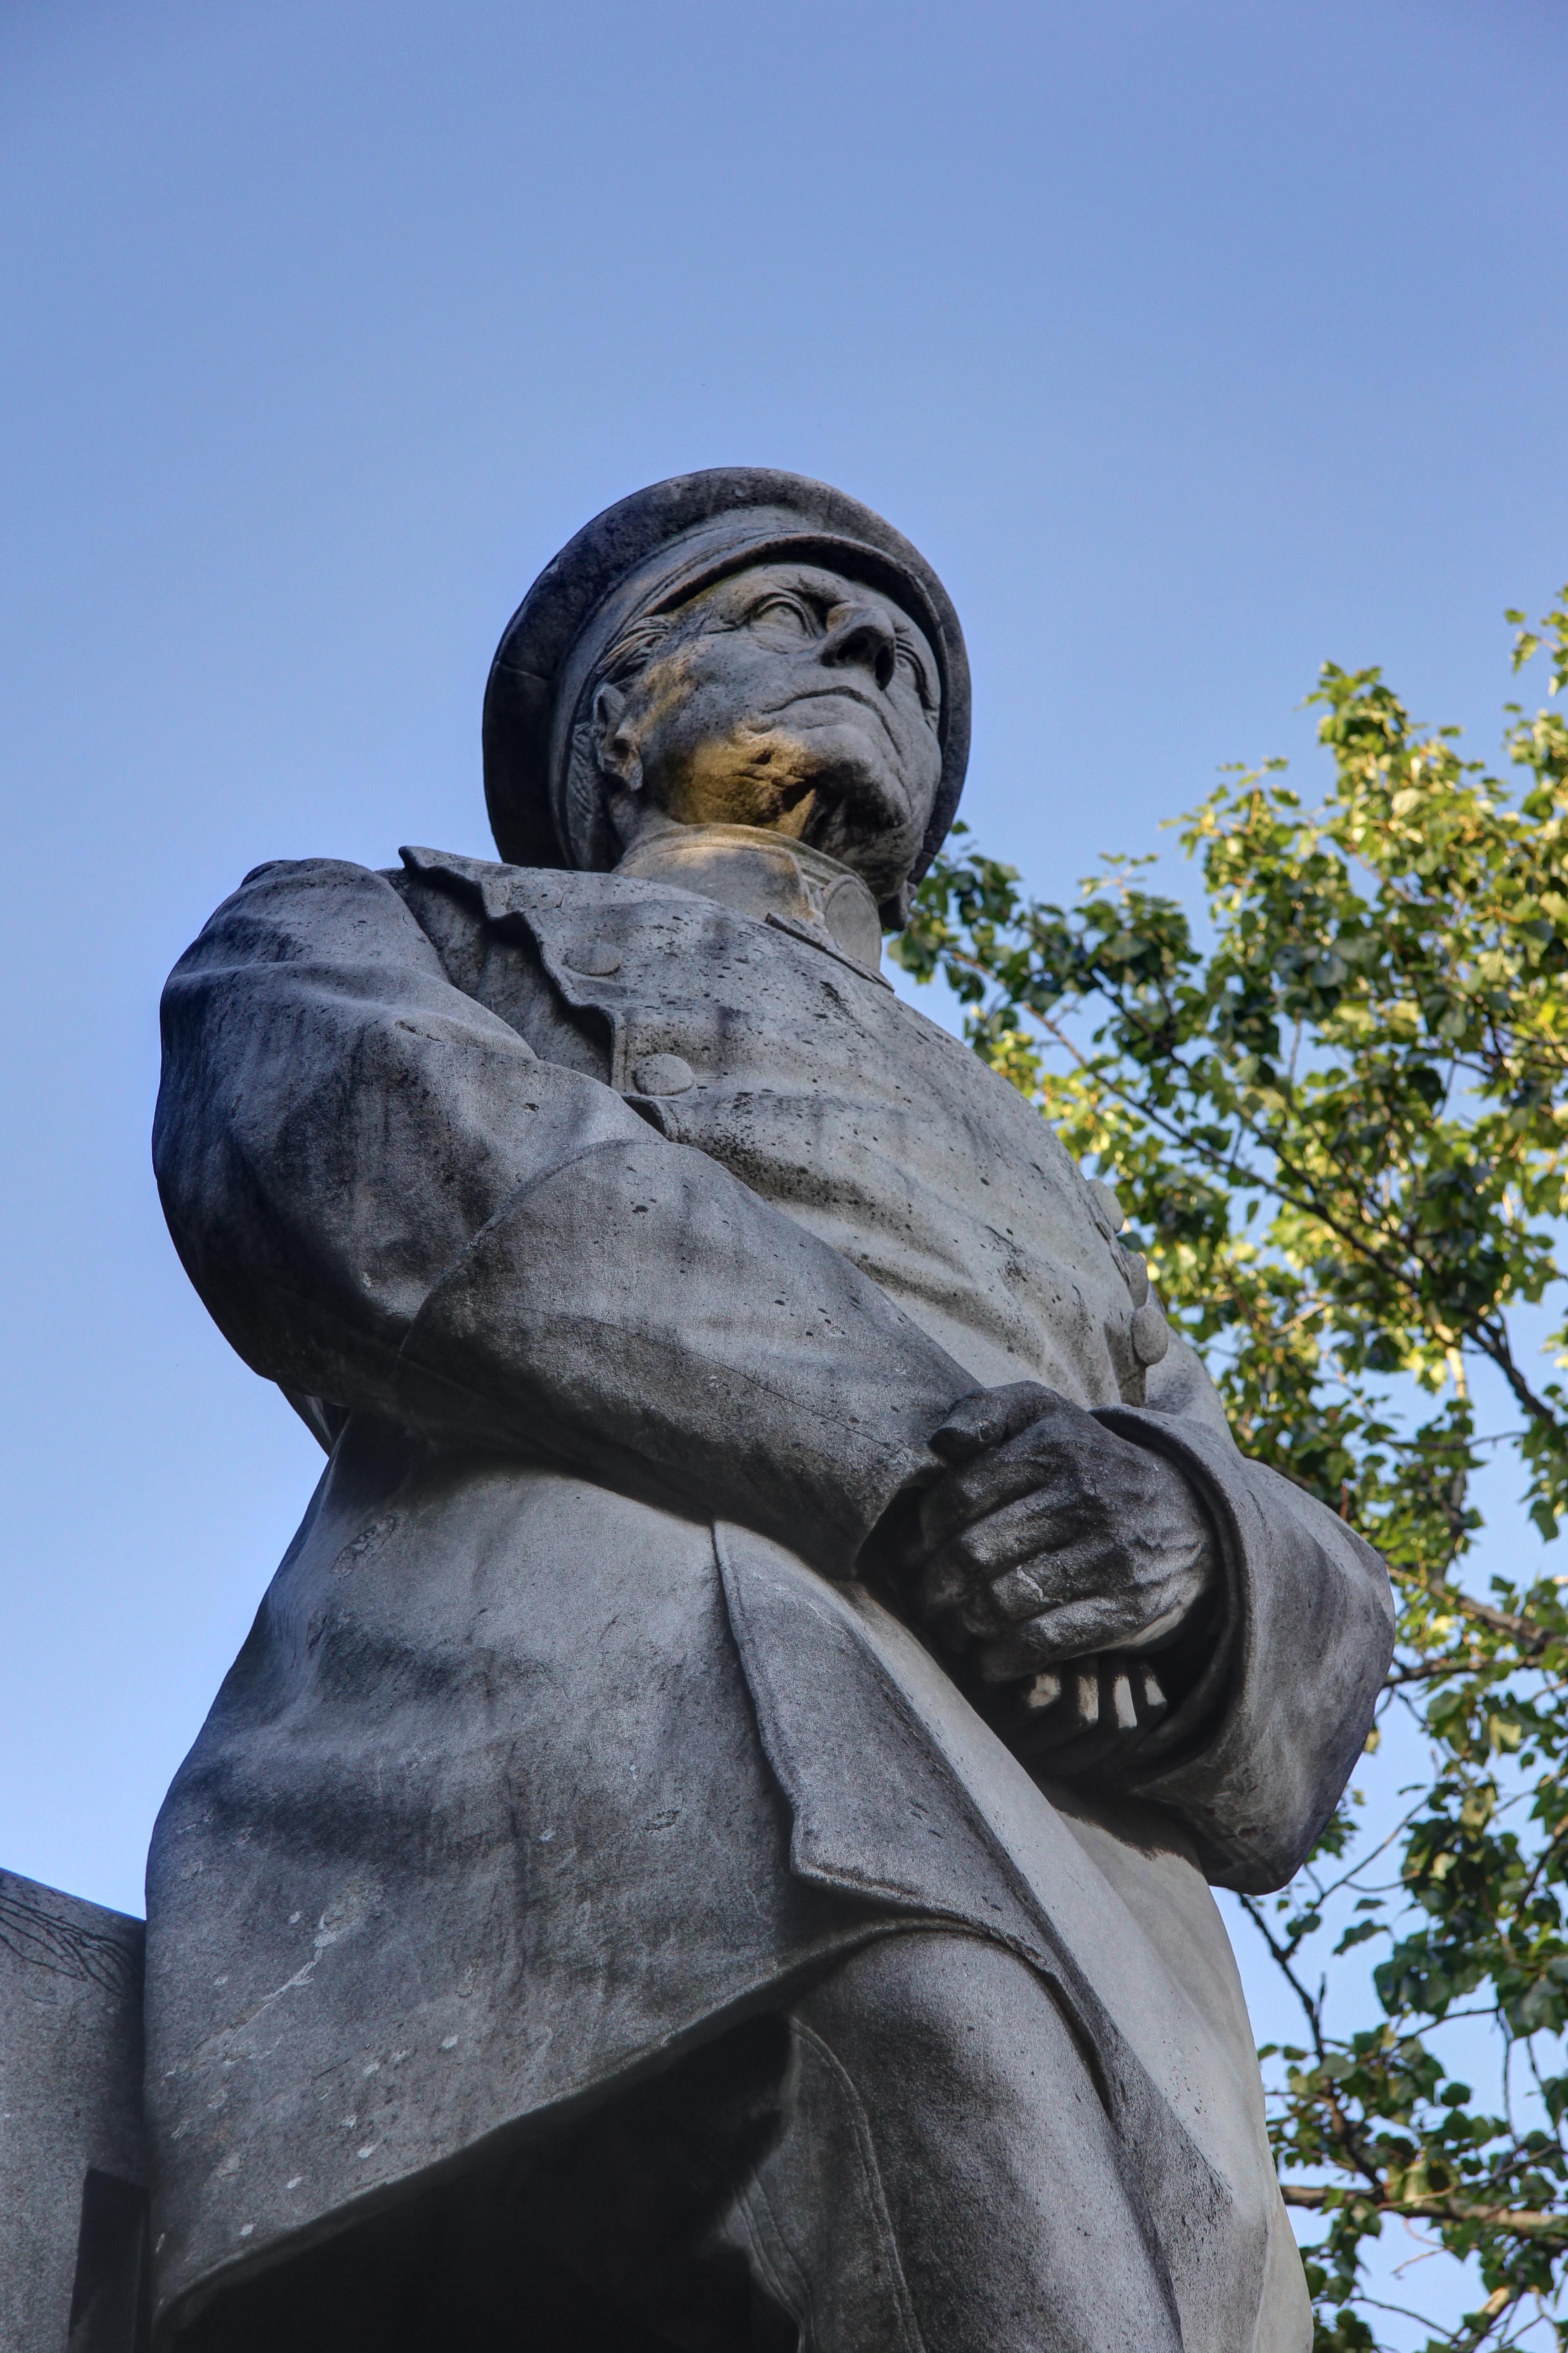 A statue of Prussian Field Marsall, Helmult Graf Von Molke, in the Tiergarten in Berlin